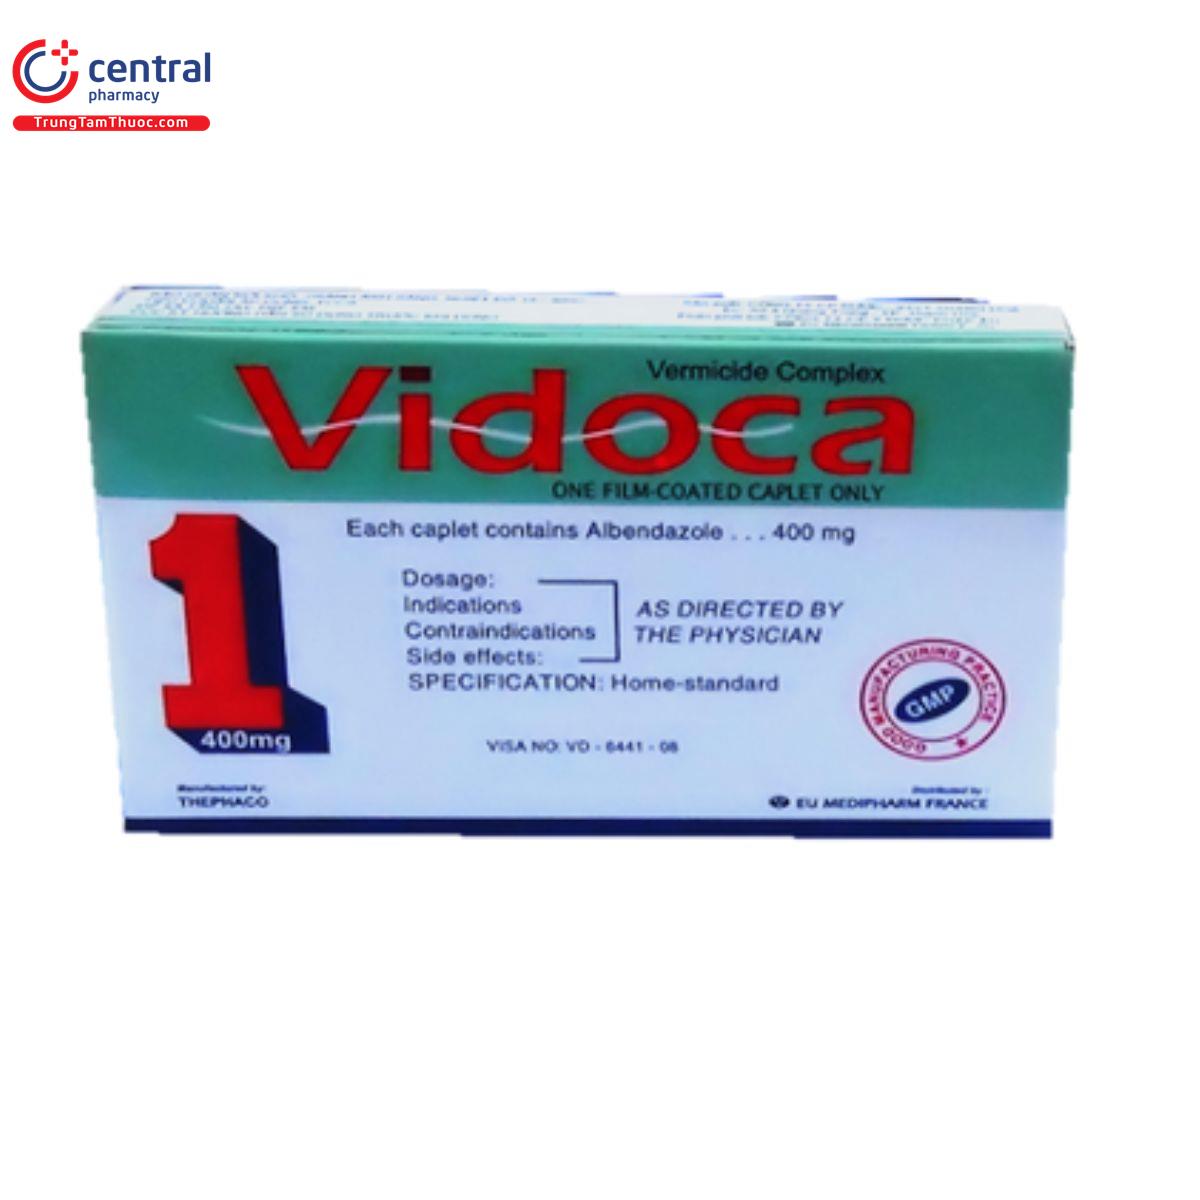 thuoc vidoca 2 K4518